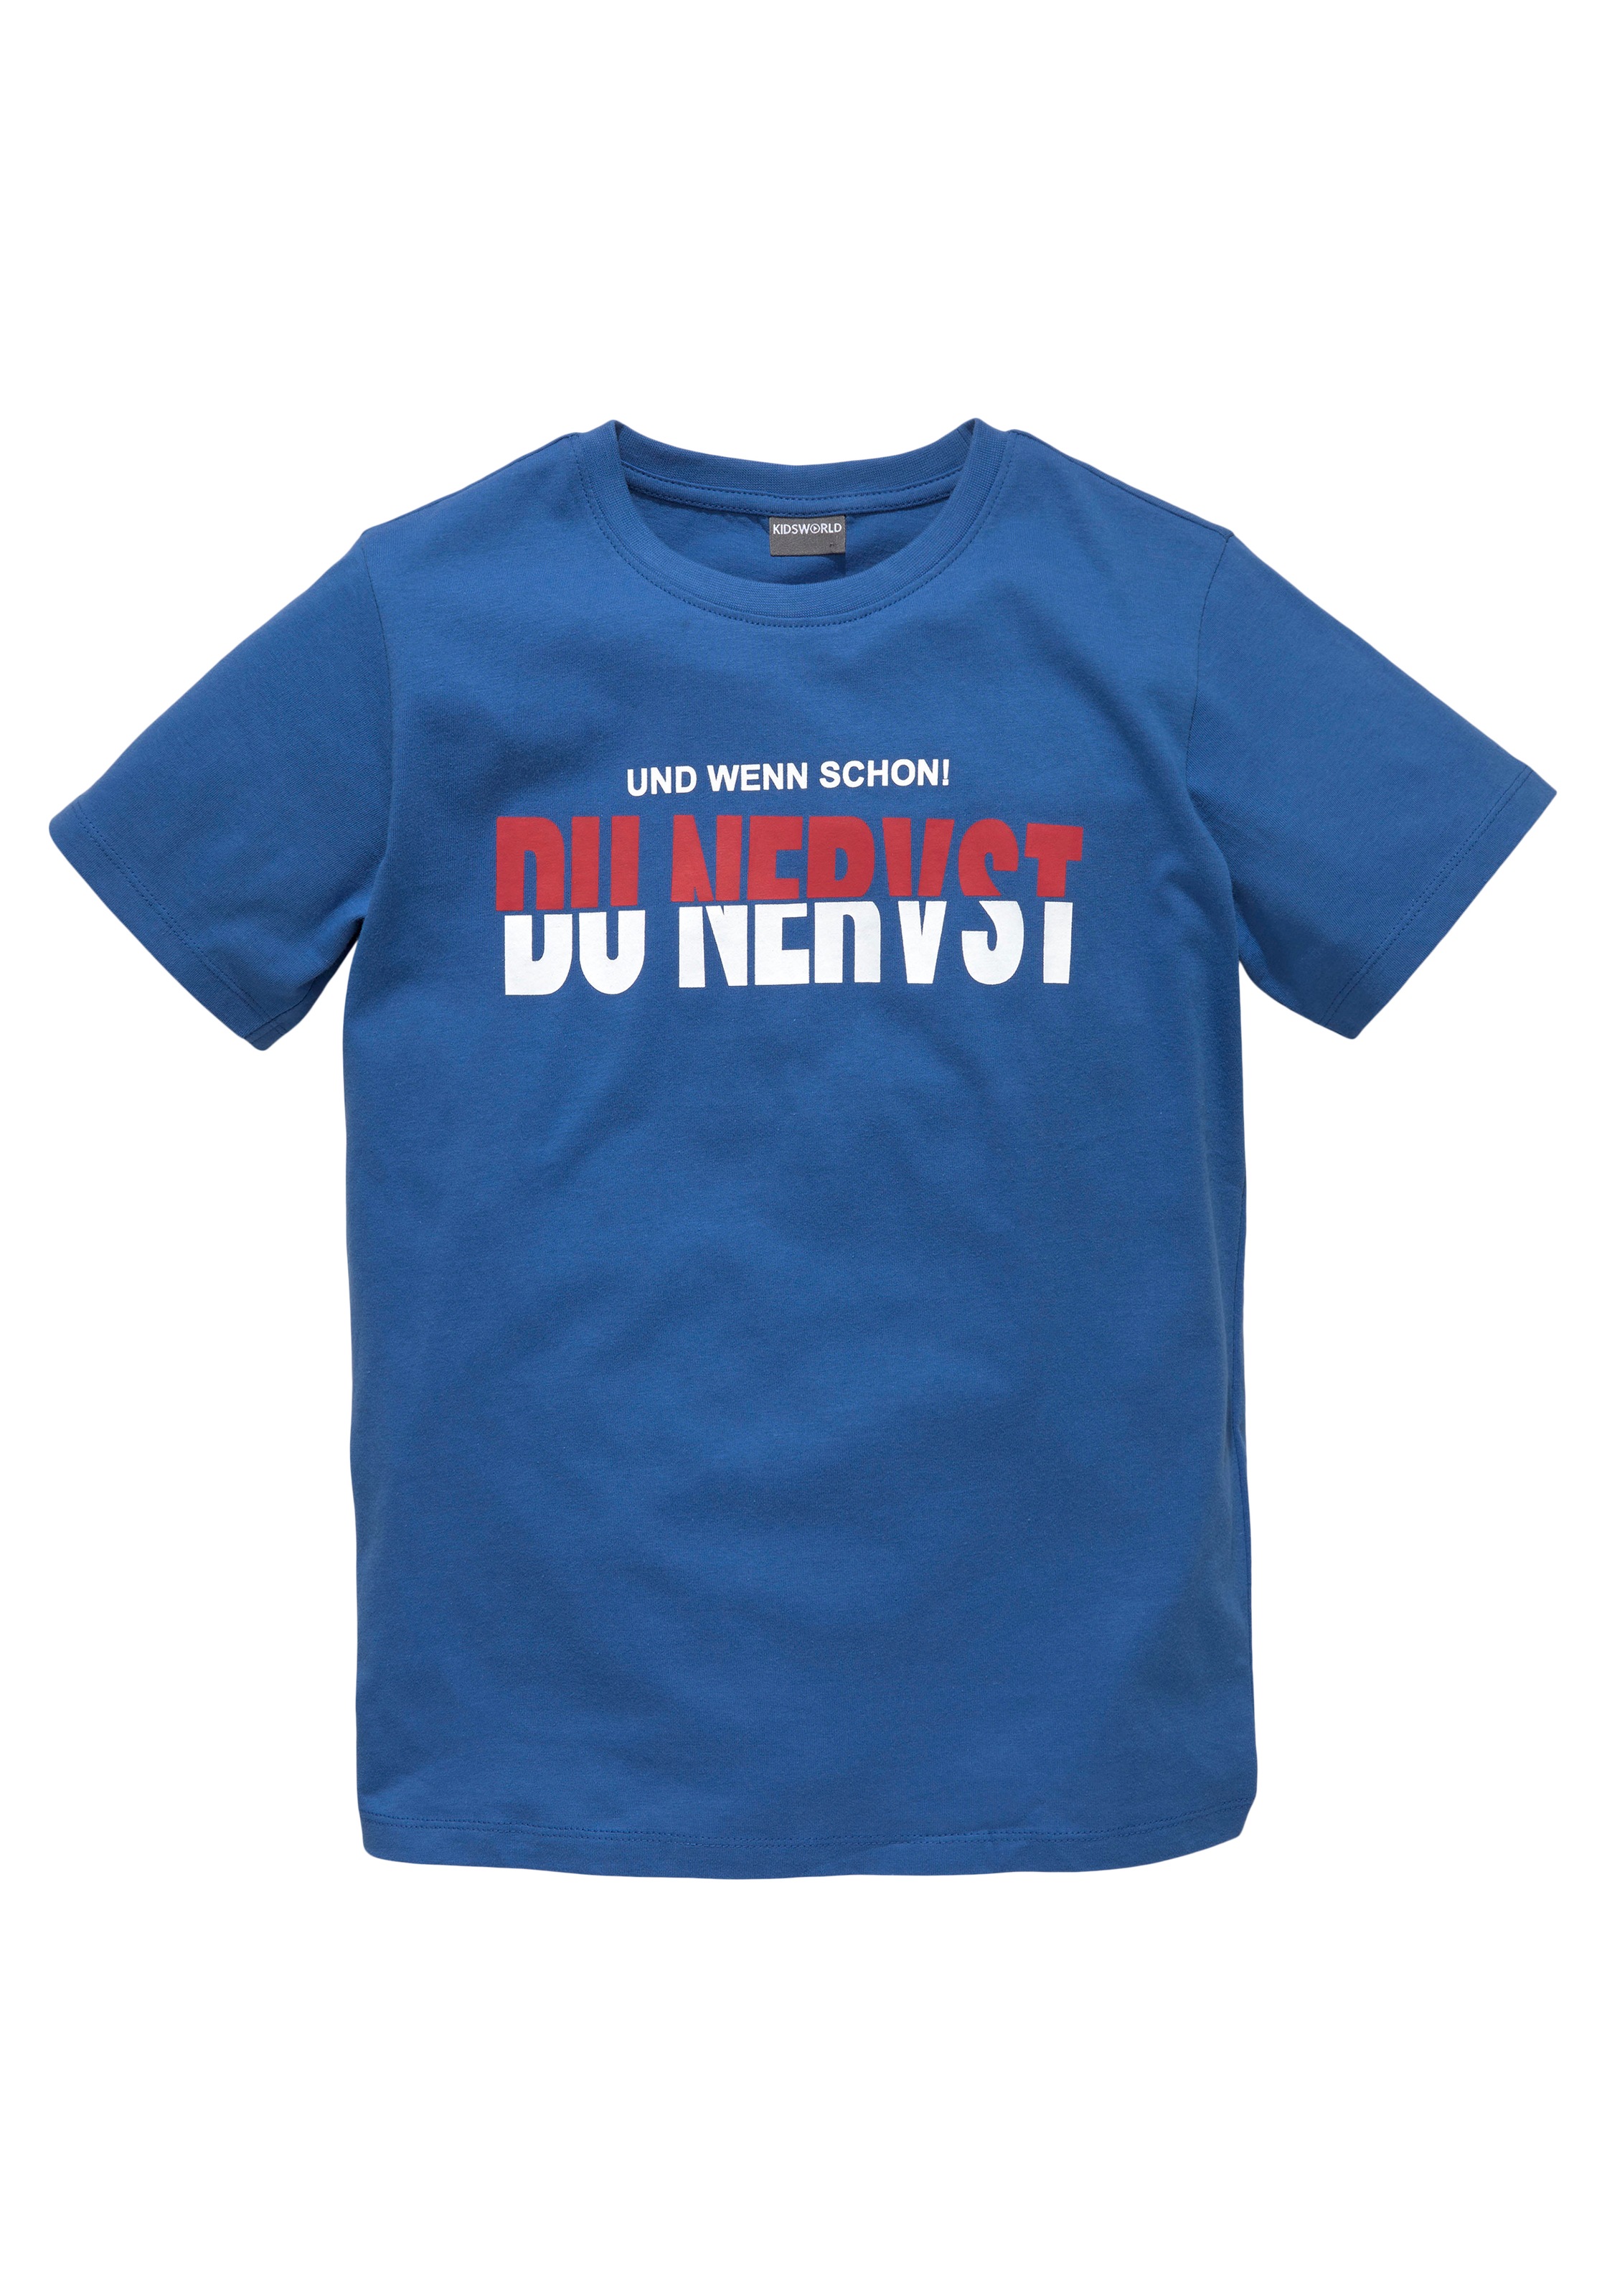 KIDSWORLD online ✵ »DU | kaufen Jelmoli-Versand NERVST«, T-Shirt Sprücheshirt